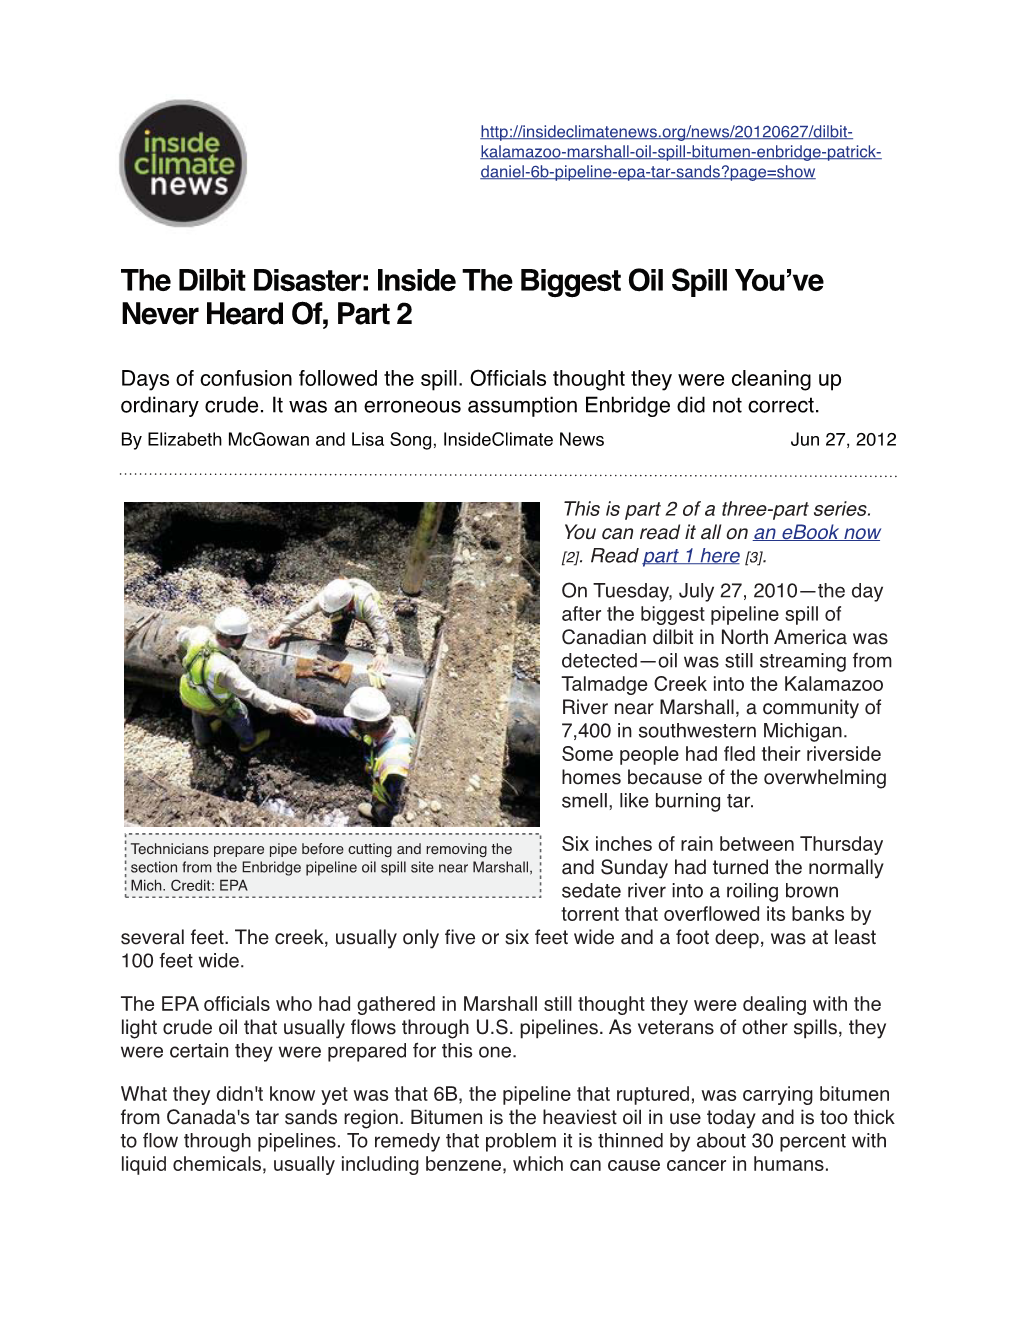 The Dilbit Disaster: Inside the Biggest Oil Spill You've Never Heard Of